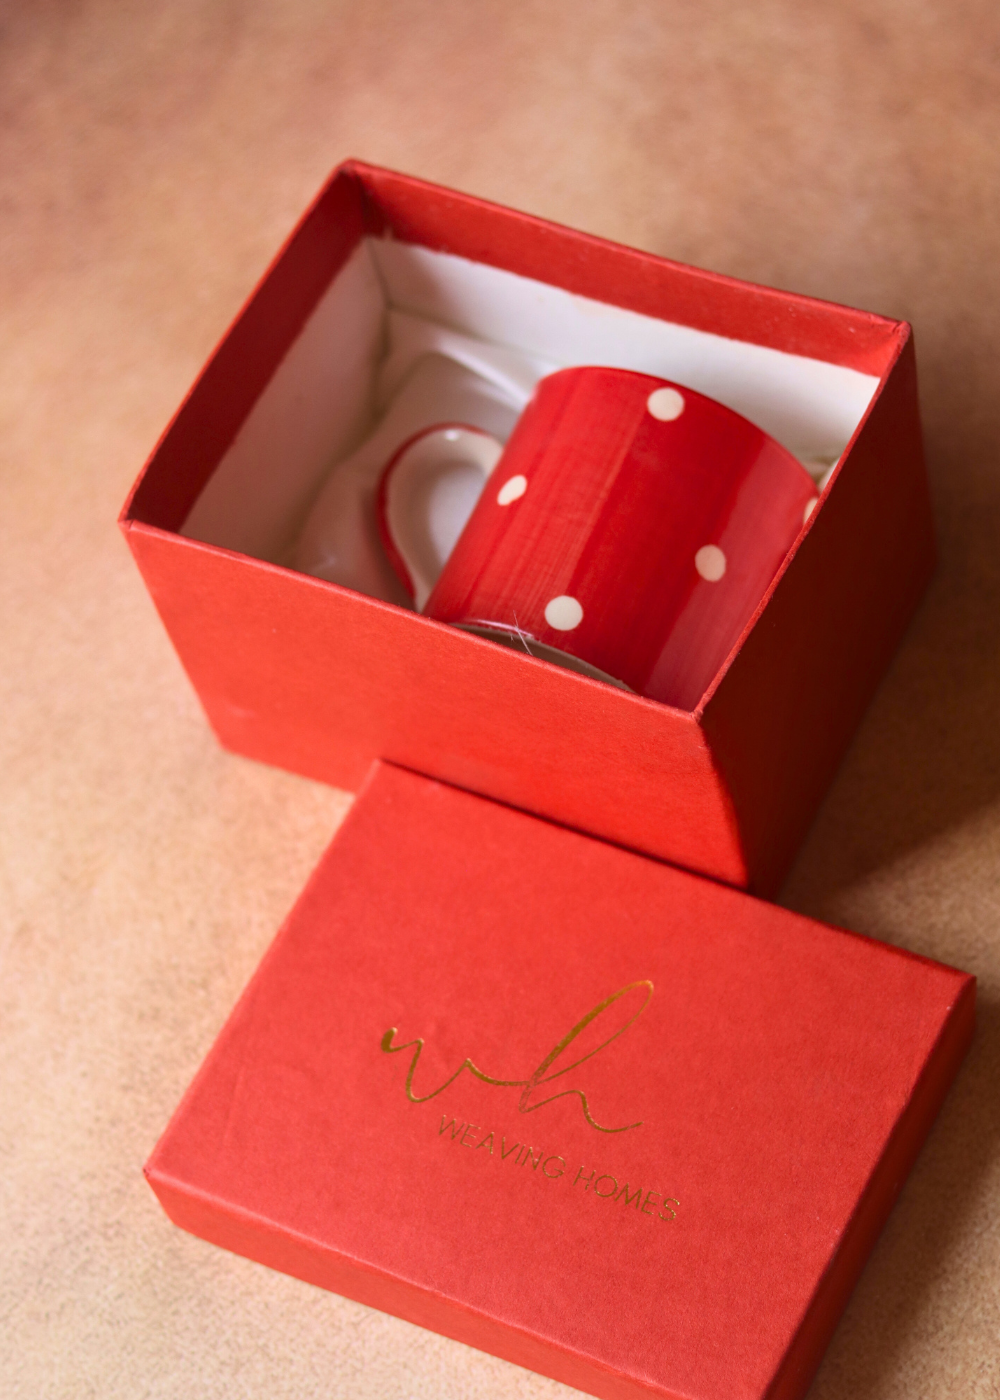 Drinkware mug in a red box 